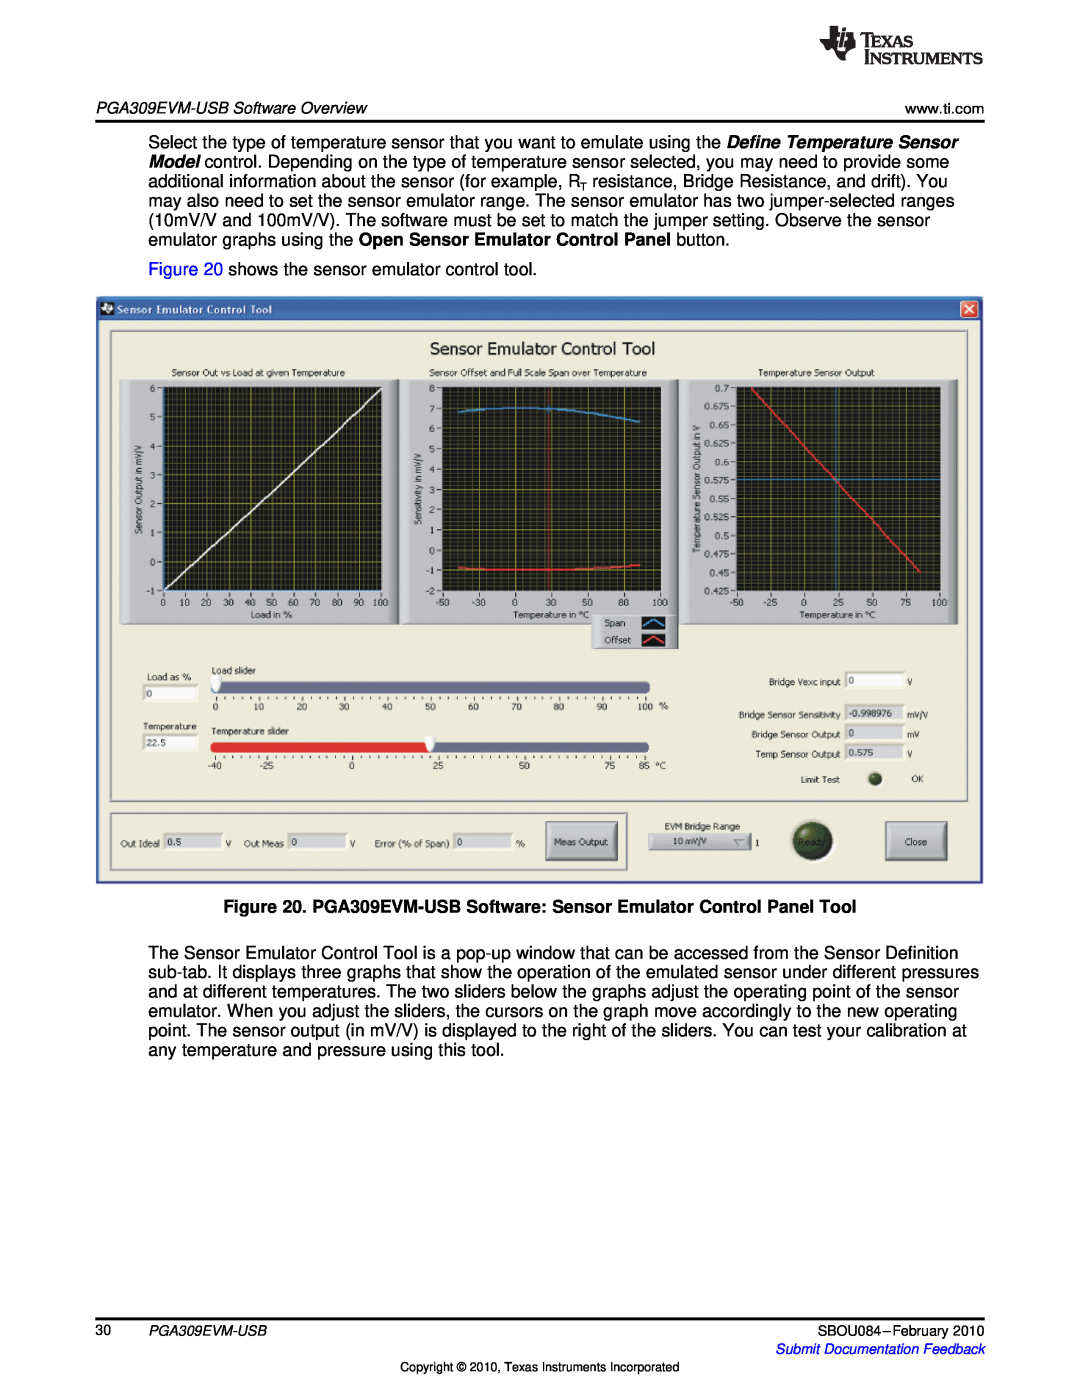 Texas Instruments manual PGA309EVM-USB Software Sensor Emulator Control Panel Tool 